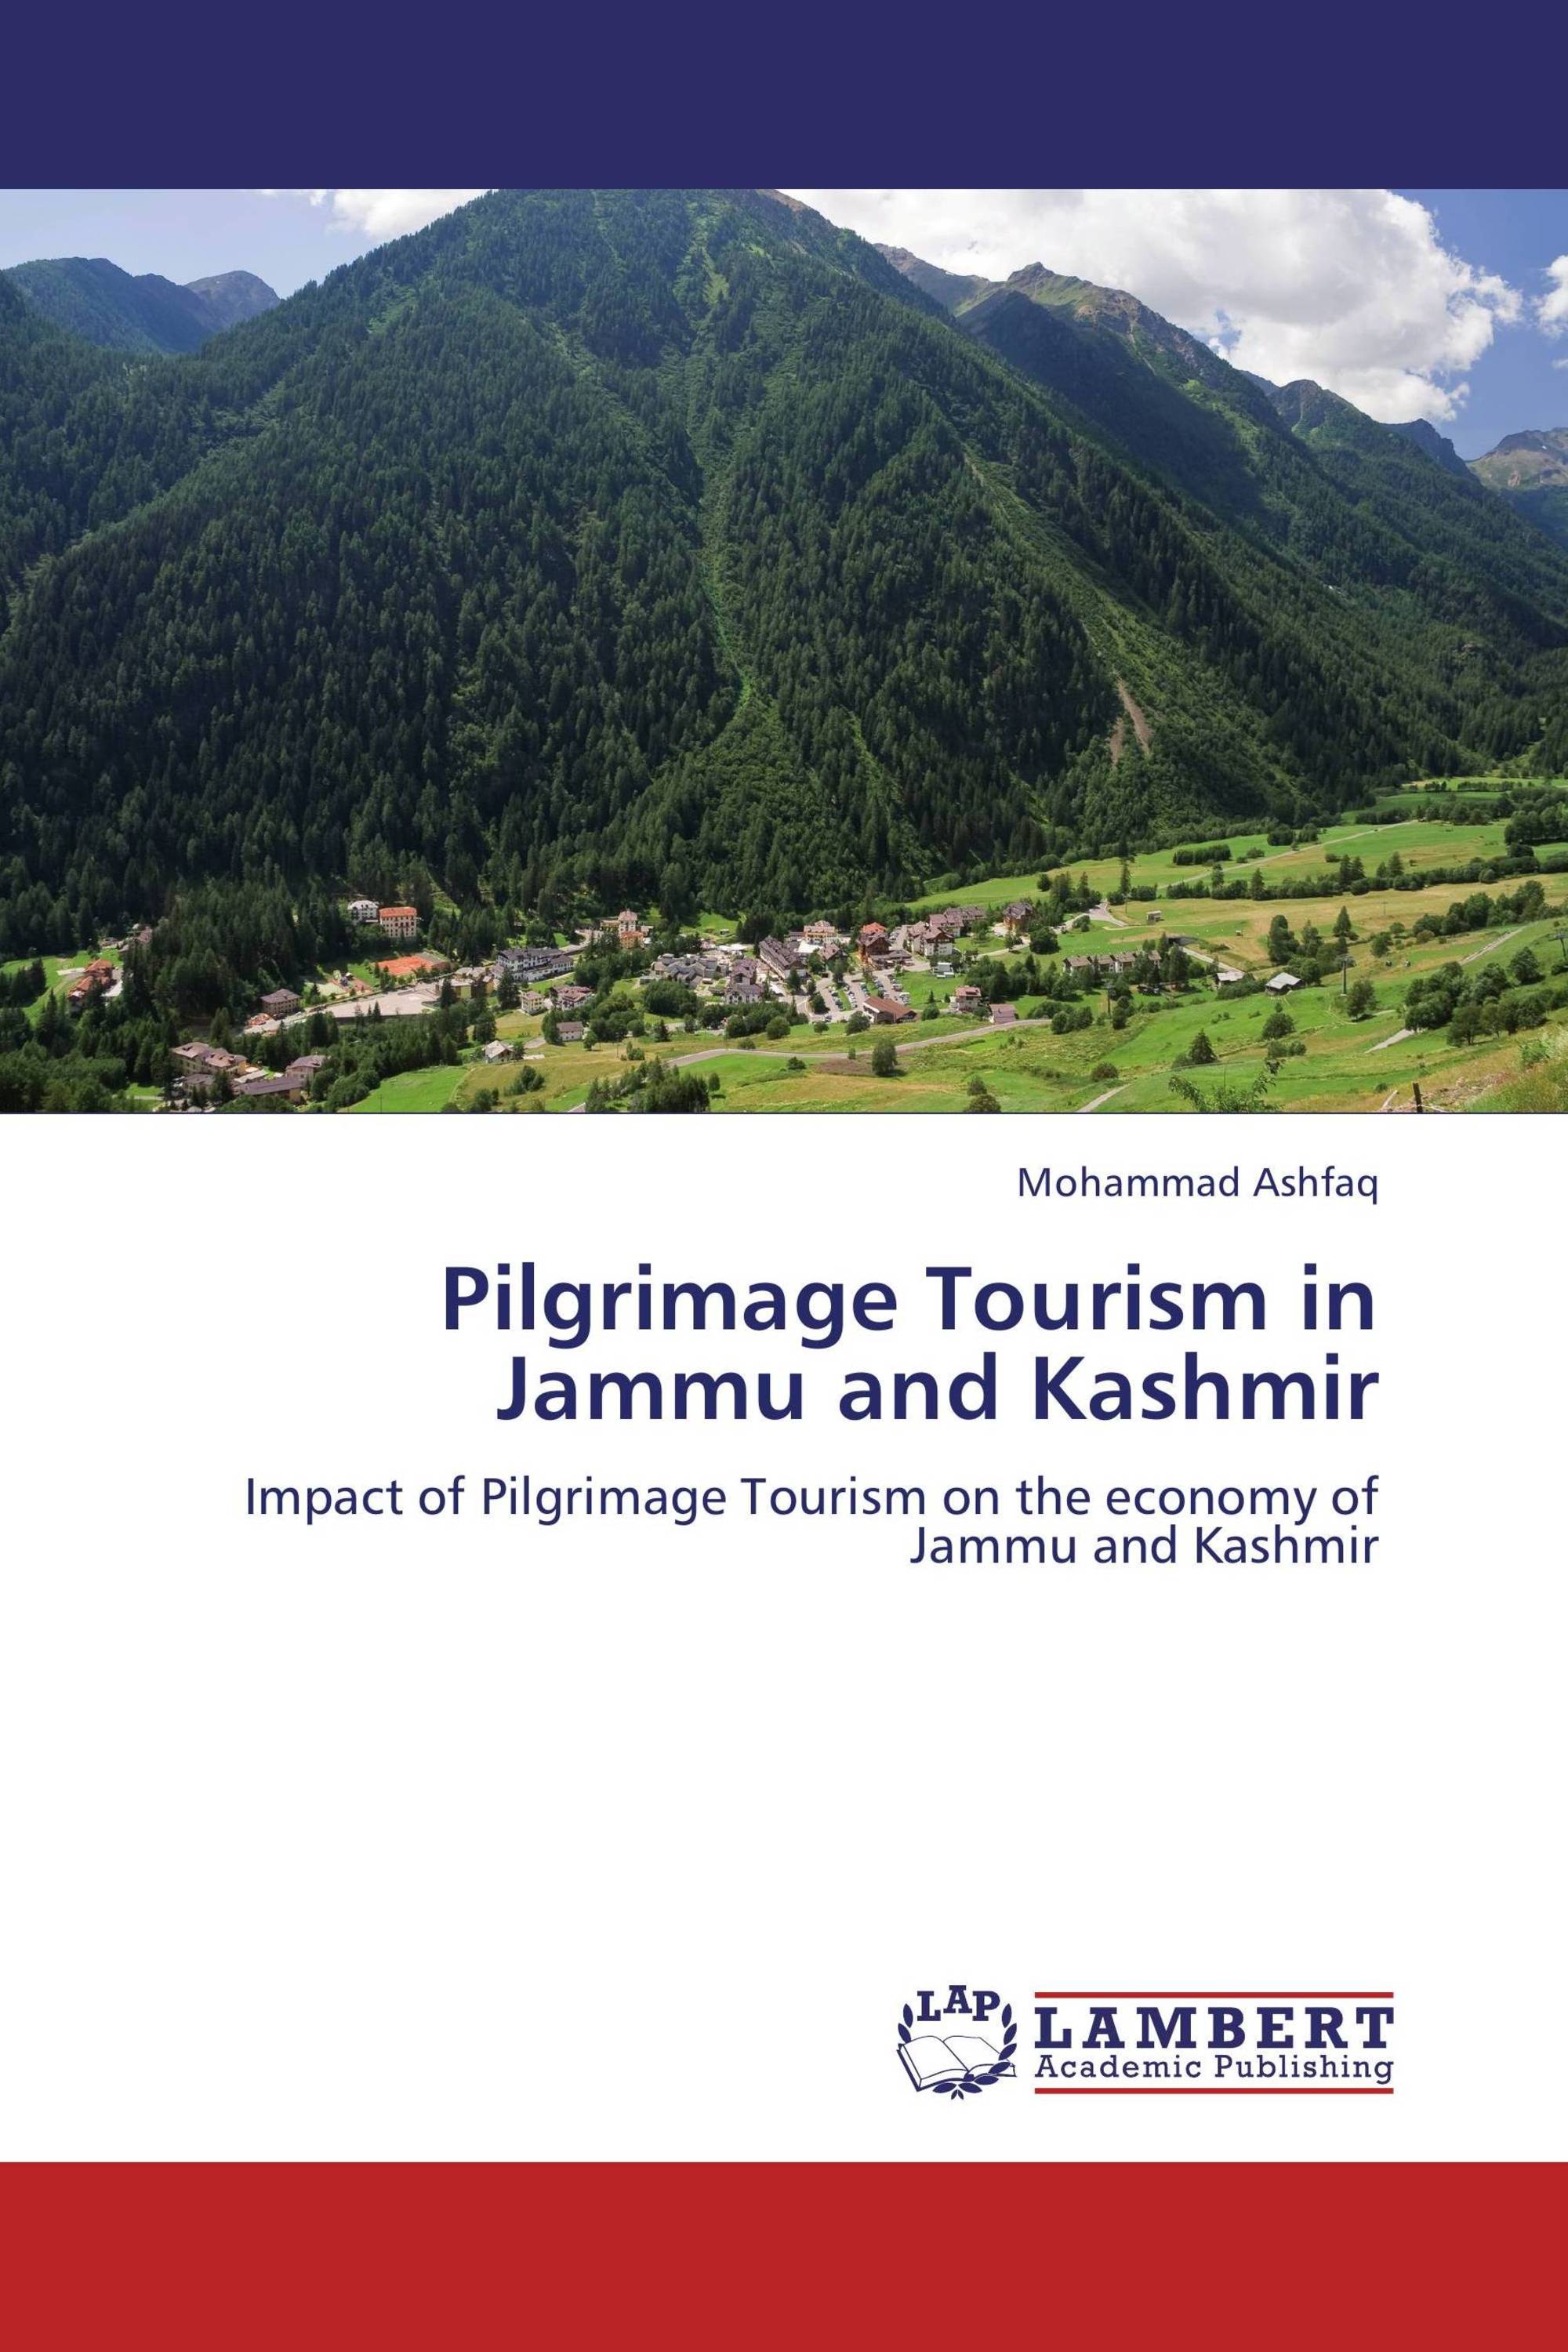 dissertation on pilgrimage tourism